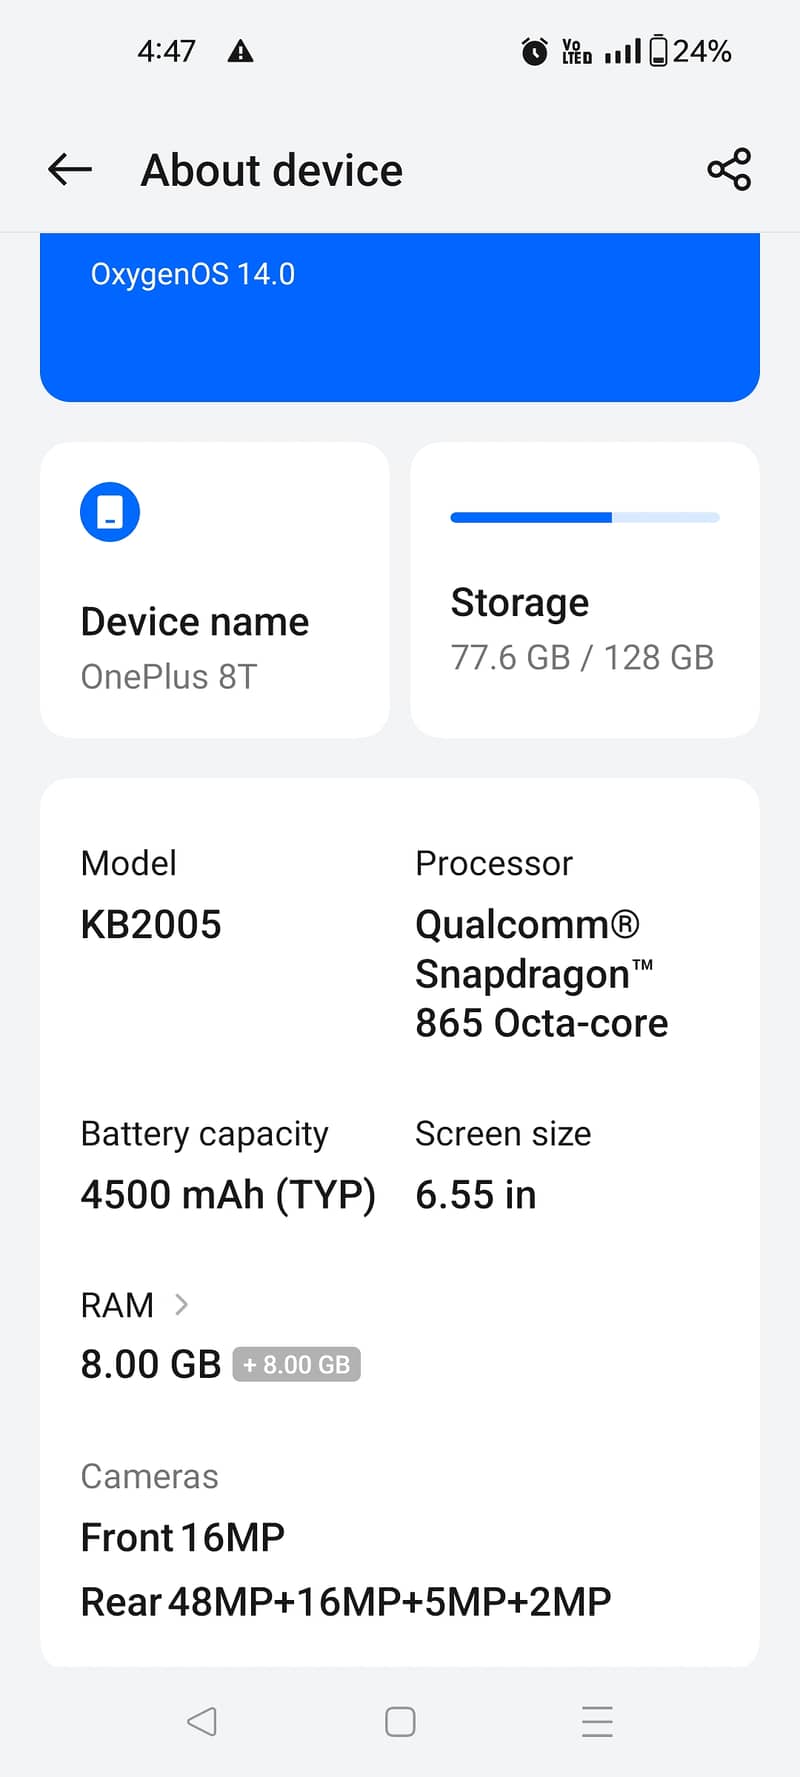 OnePlus 8t 8GB RAM 128 GB storage all ok 10 by 10 condition LCD per ek 7